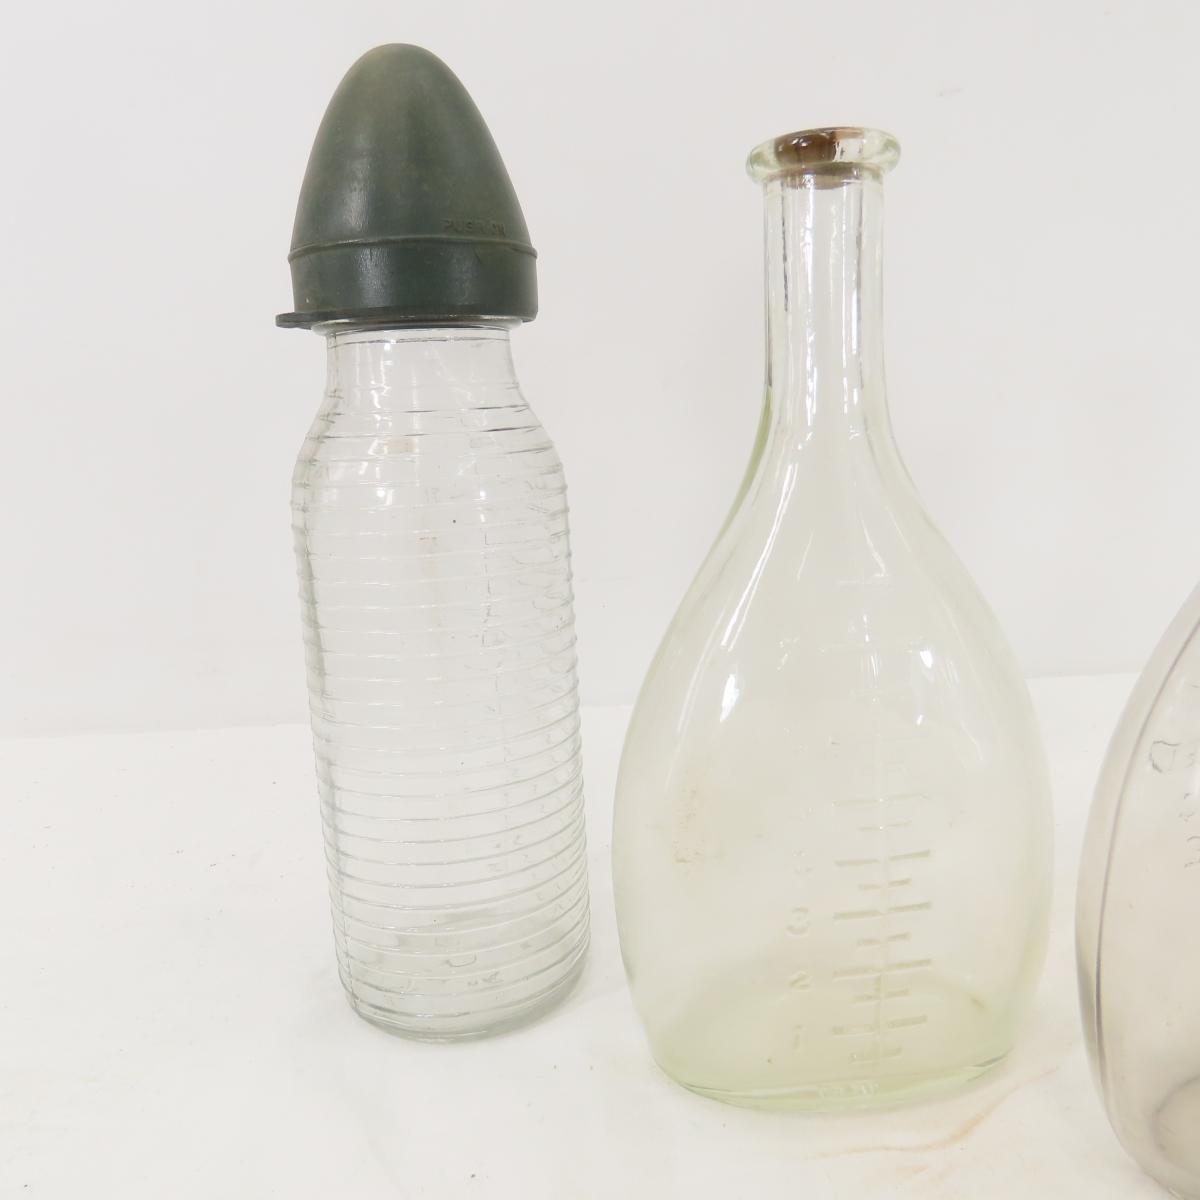 Antique Perfume Atomizer, Baby Bottles & more